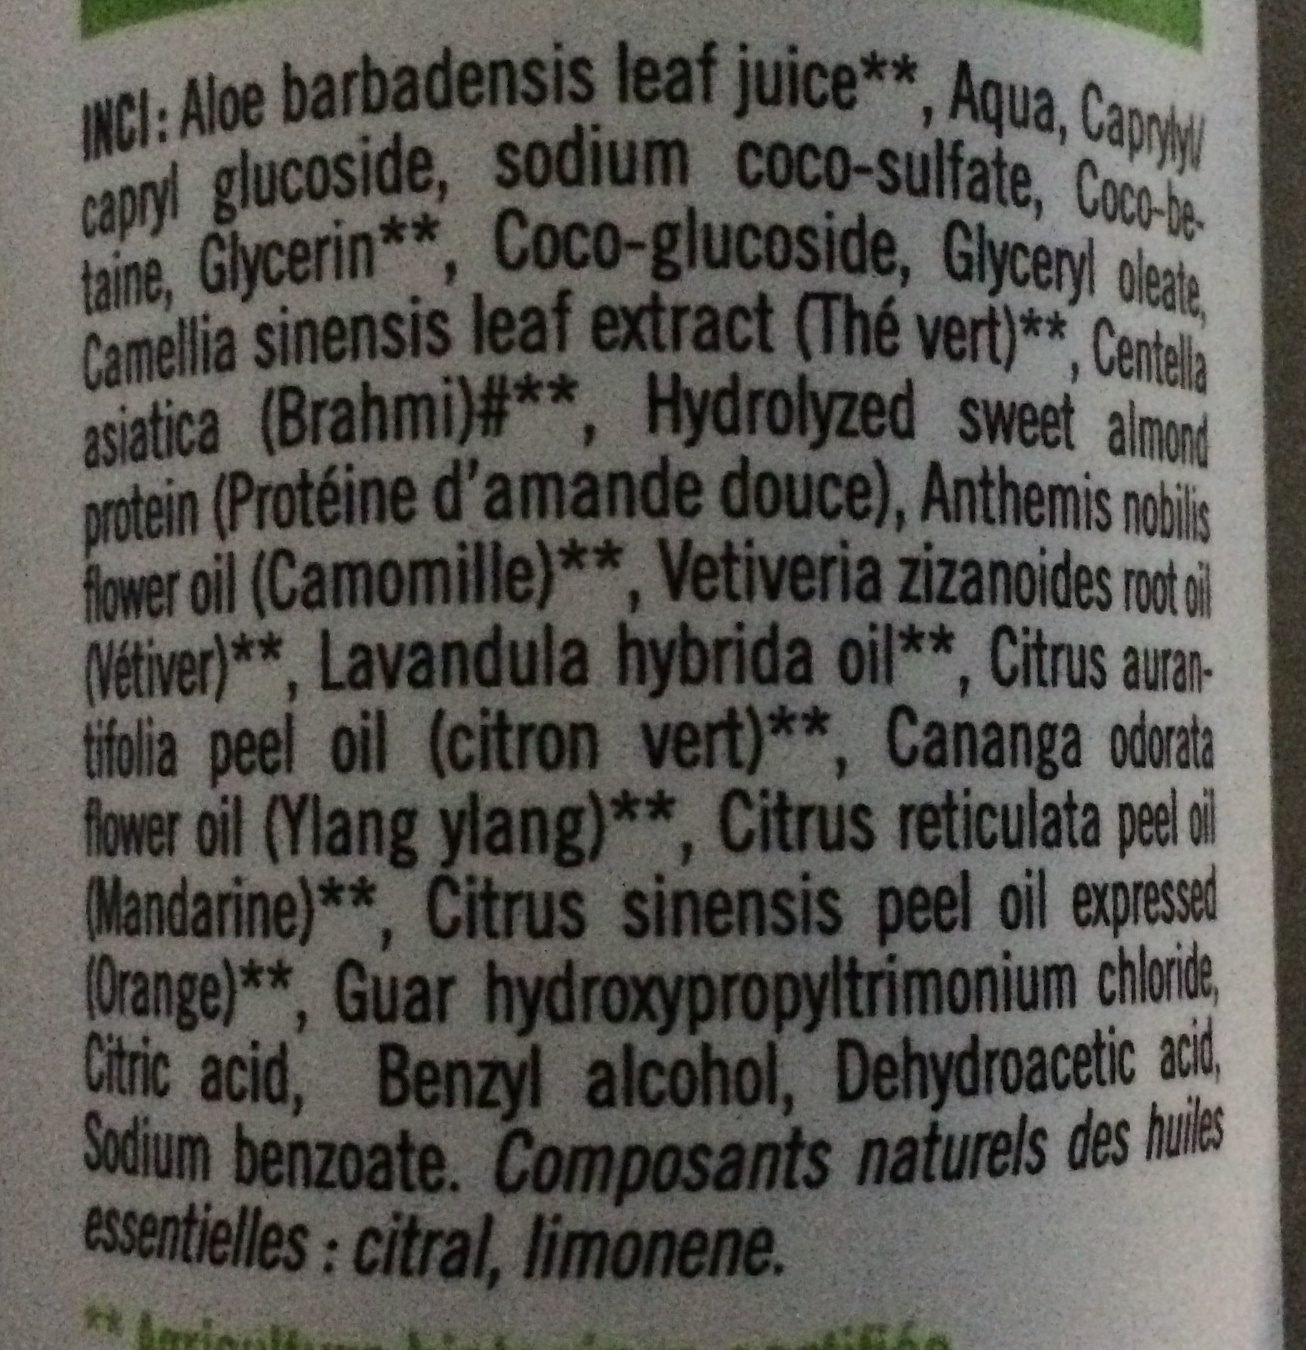 shampoing aloe vera - Ingredientes - fr